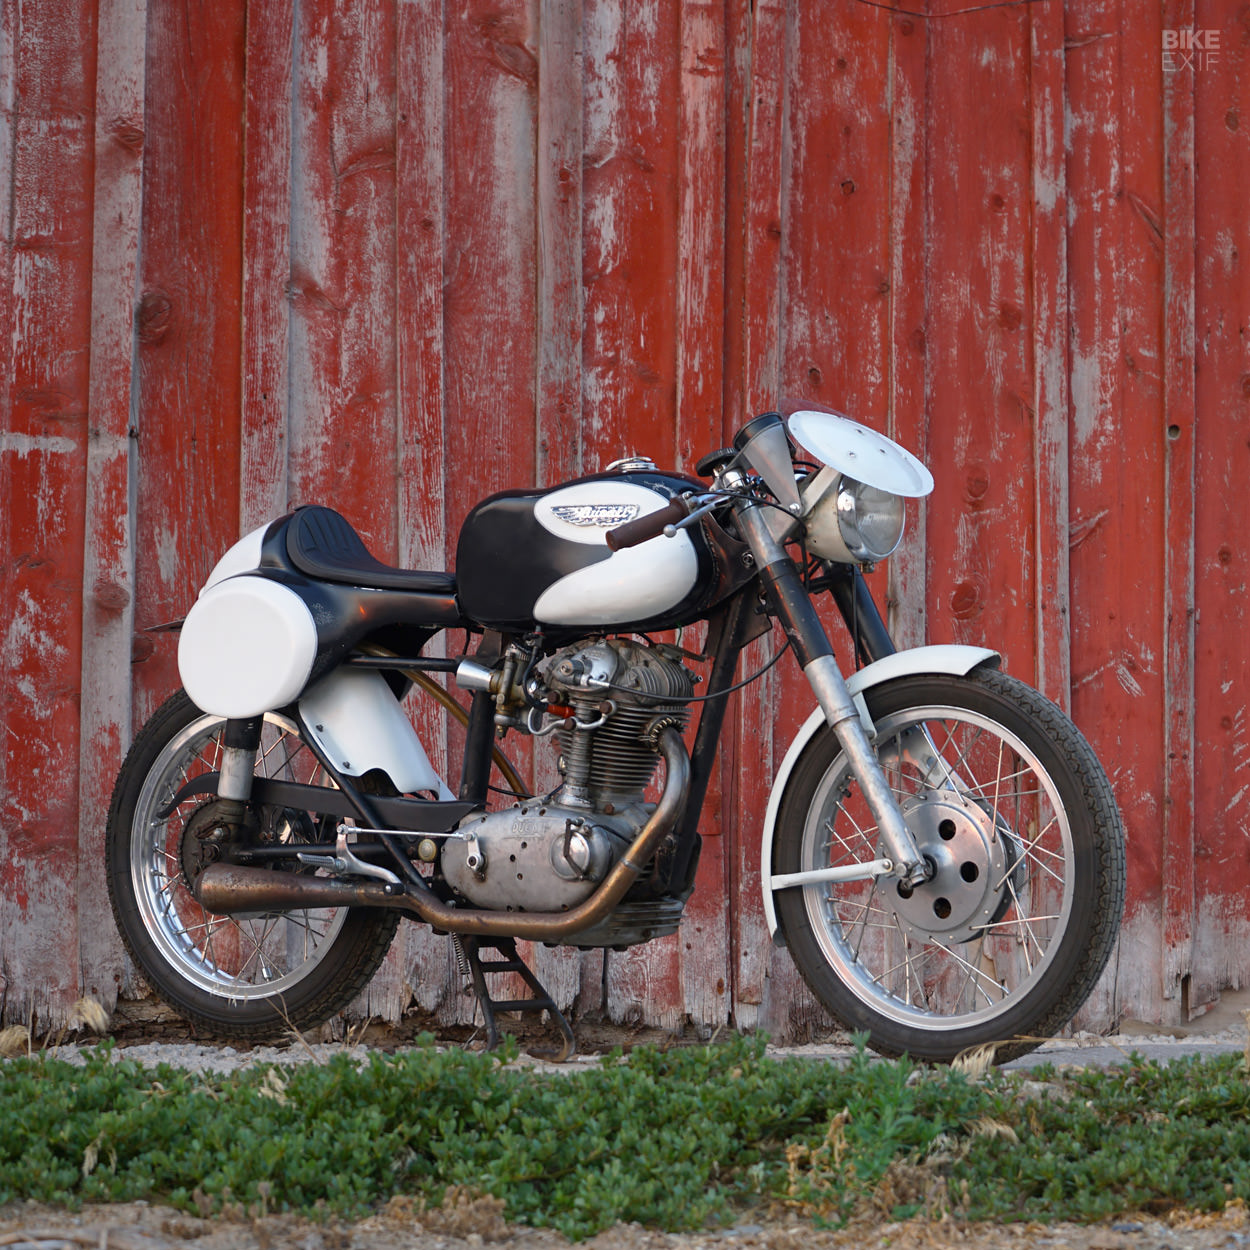 1965 Ducati 250 restomod by Union Motorcycle Classics